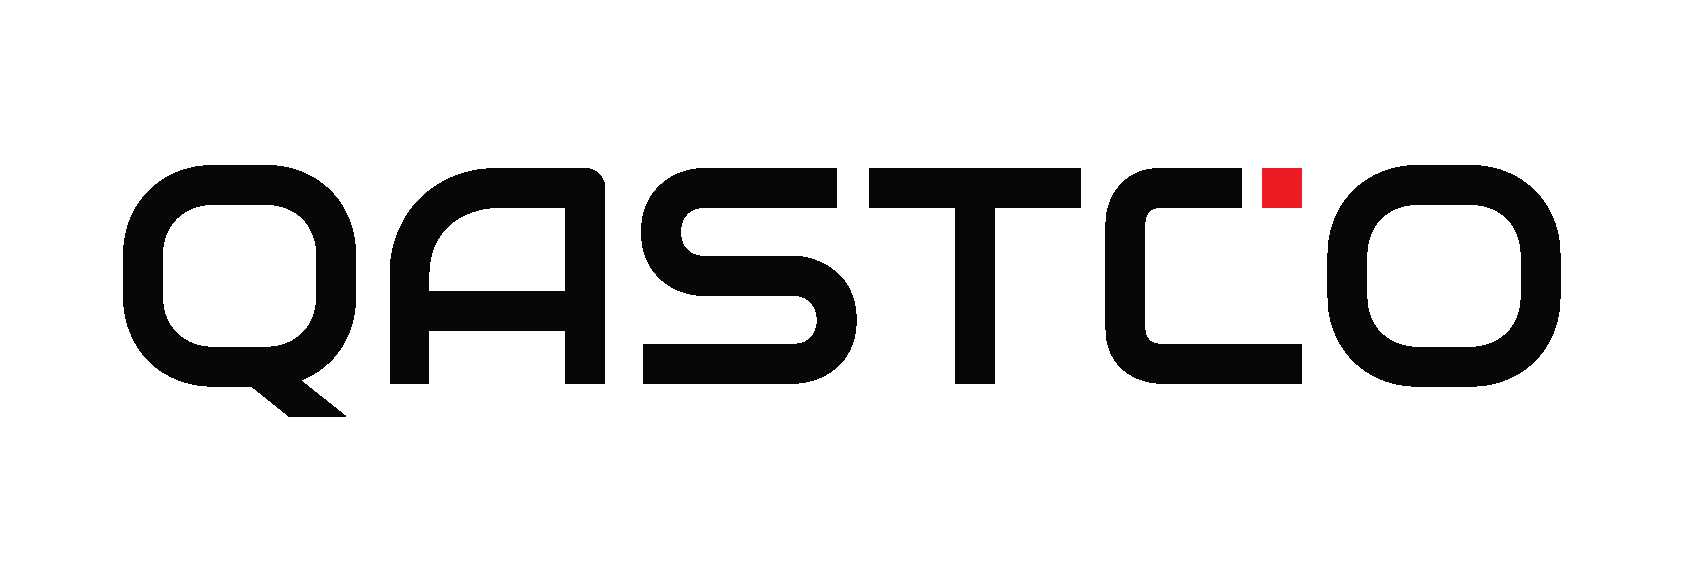 QASTCO Limited| Digital Marketing & Web Design Services